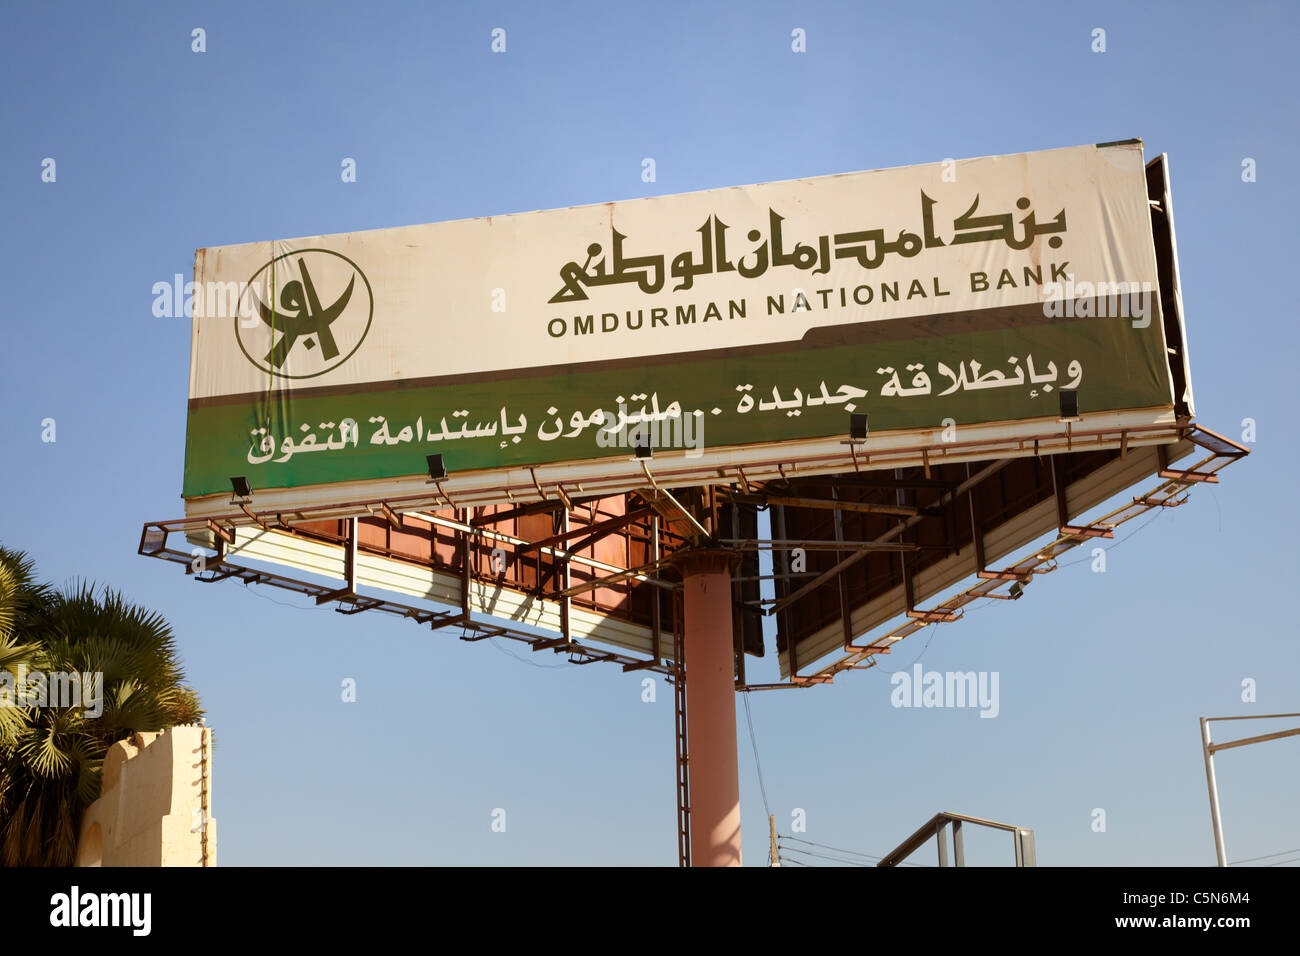 Omdurman National Bank billboard, Khartoum, Northern Sudan, Africa Stock Photo